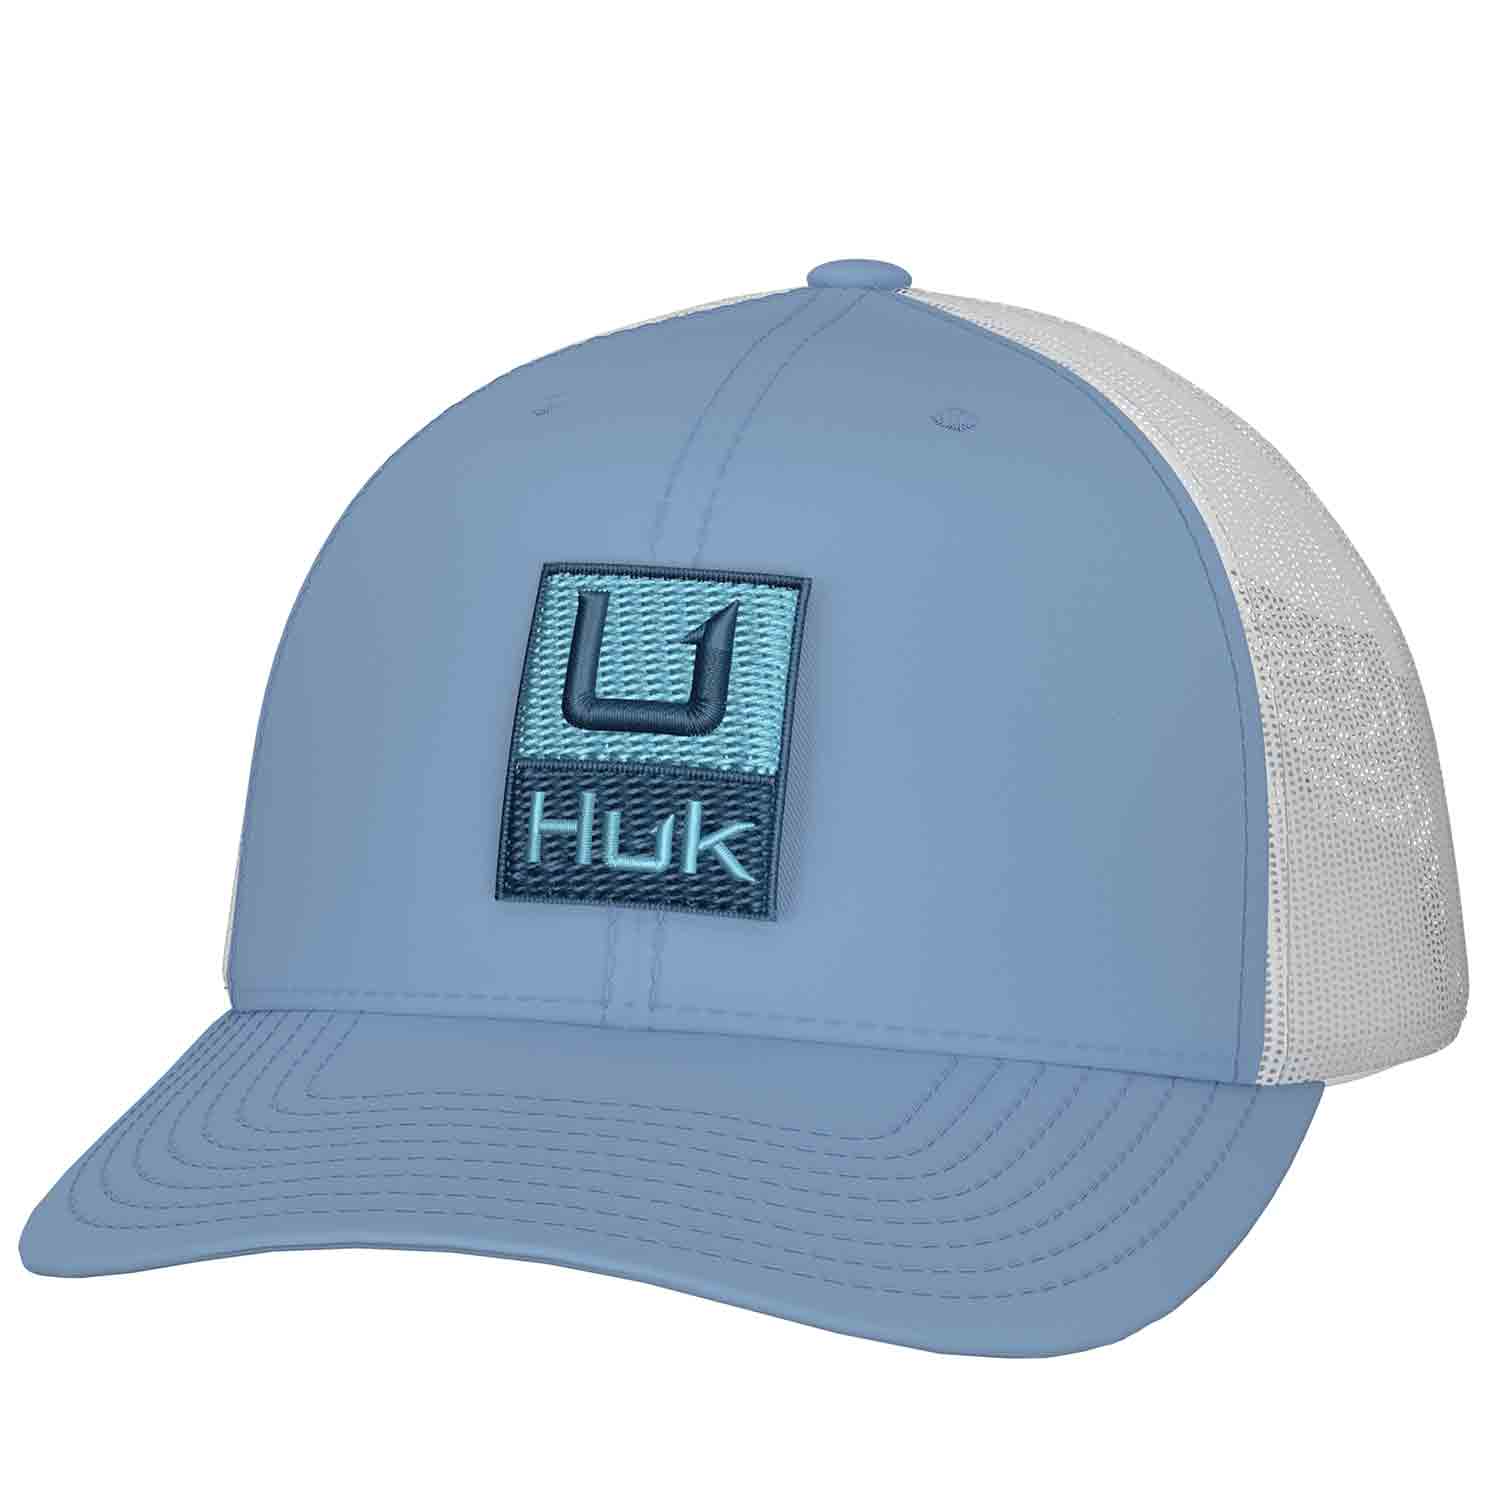 HUK Huk'D Up Trucker Hat